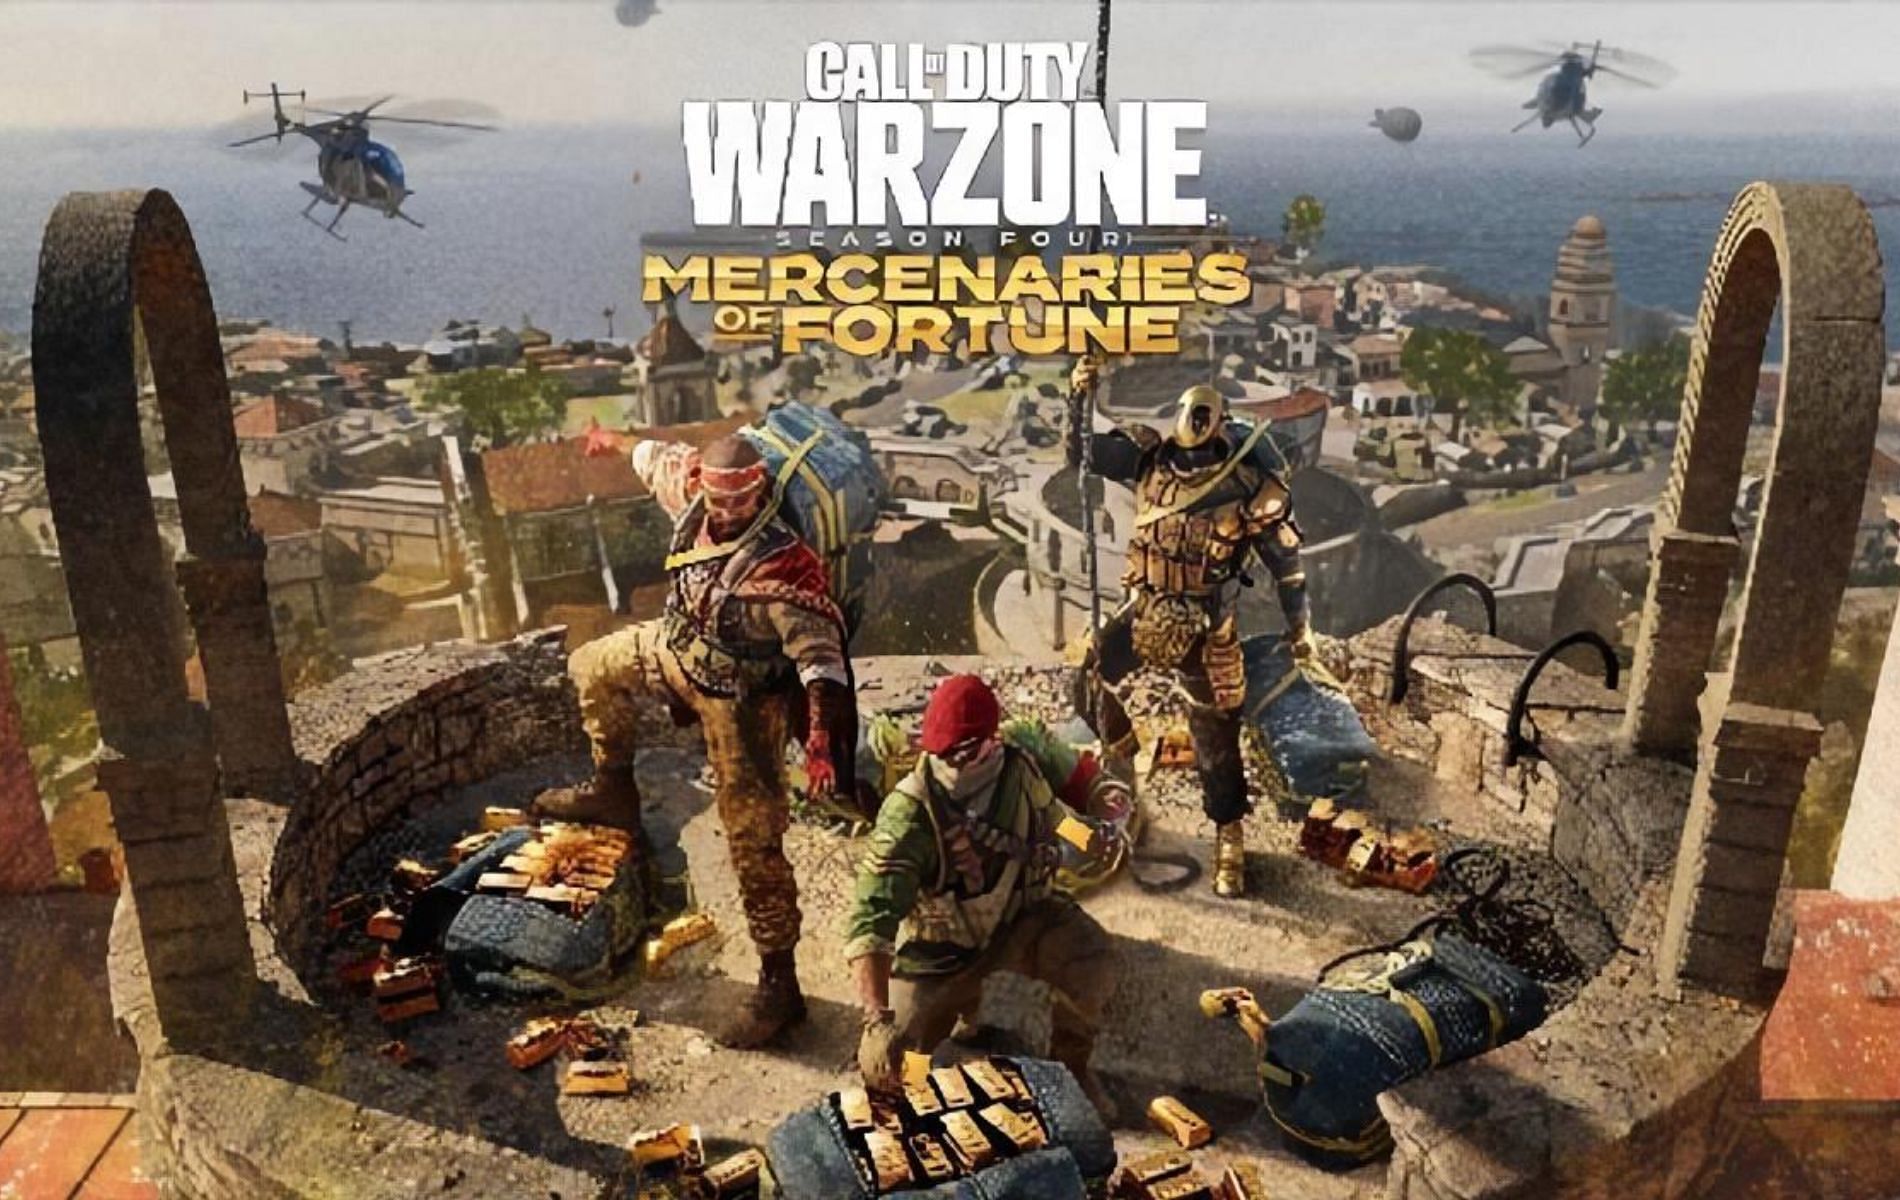 Vanguard and Warzone Season 4 (Image by Activision)